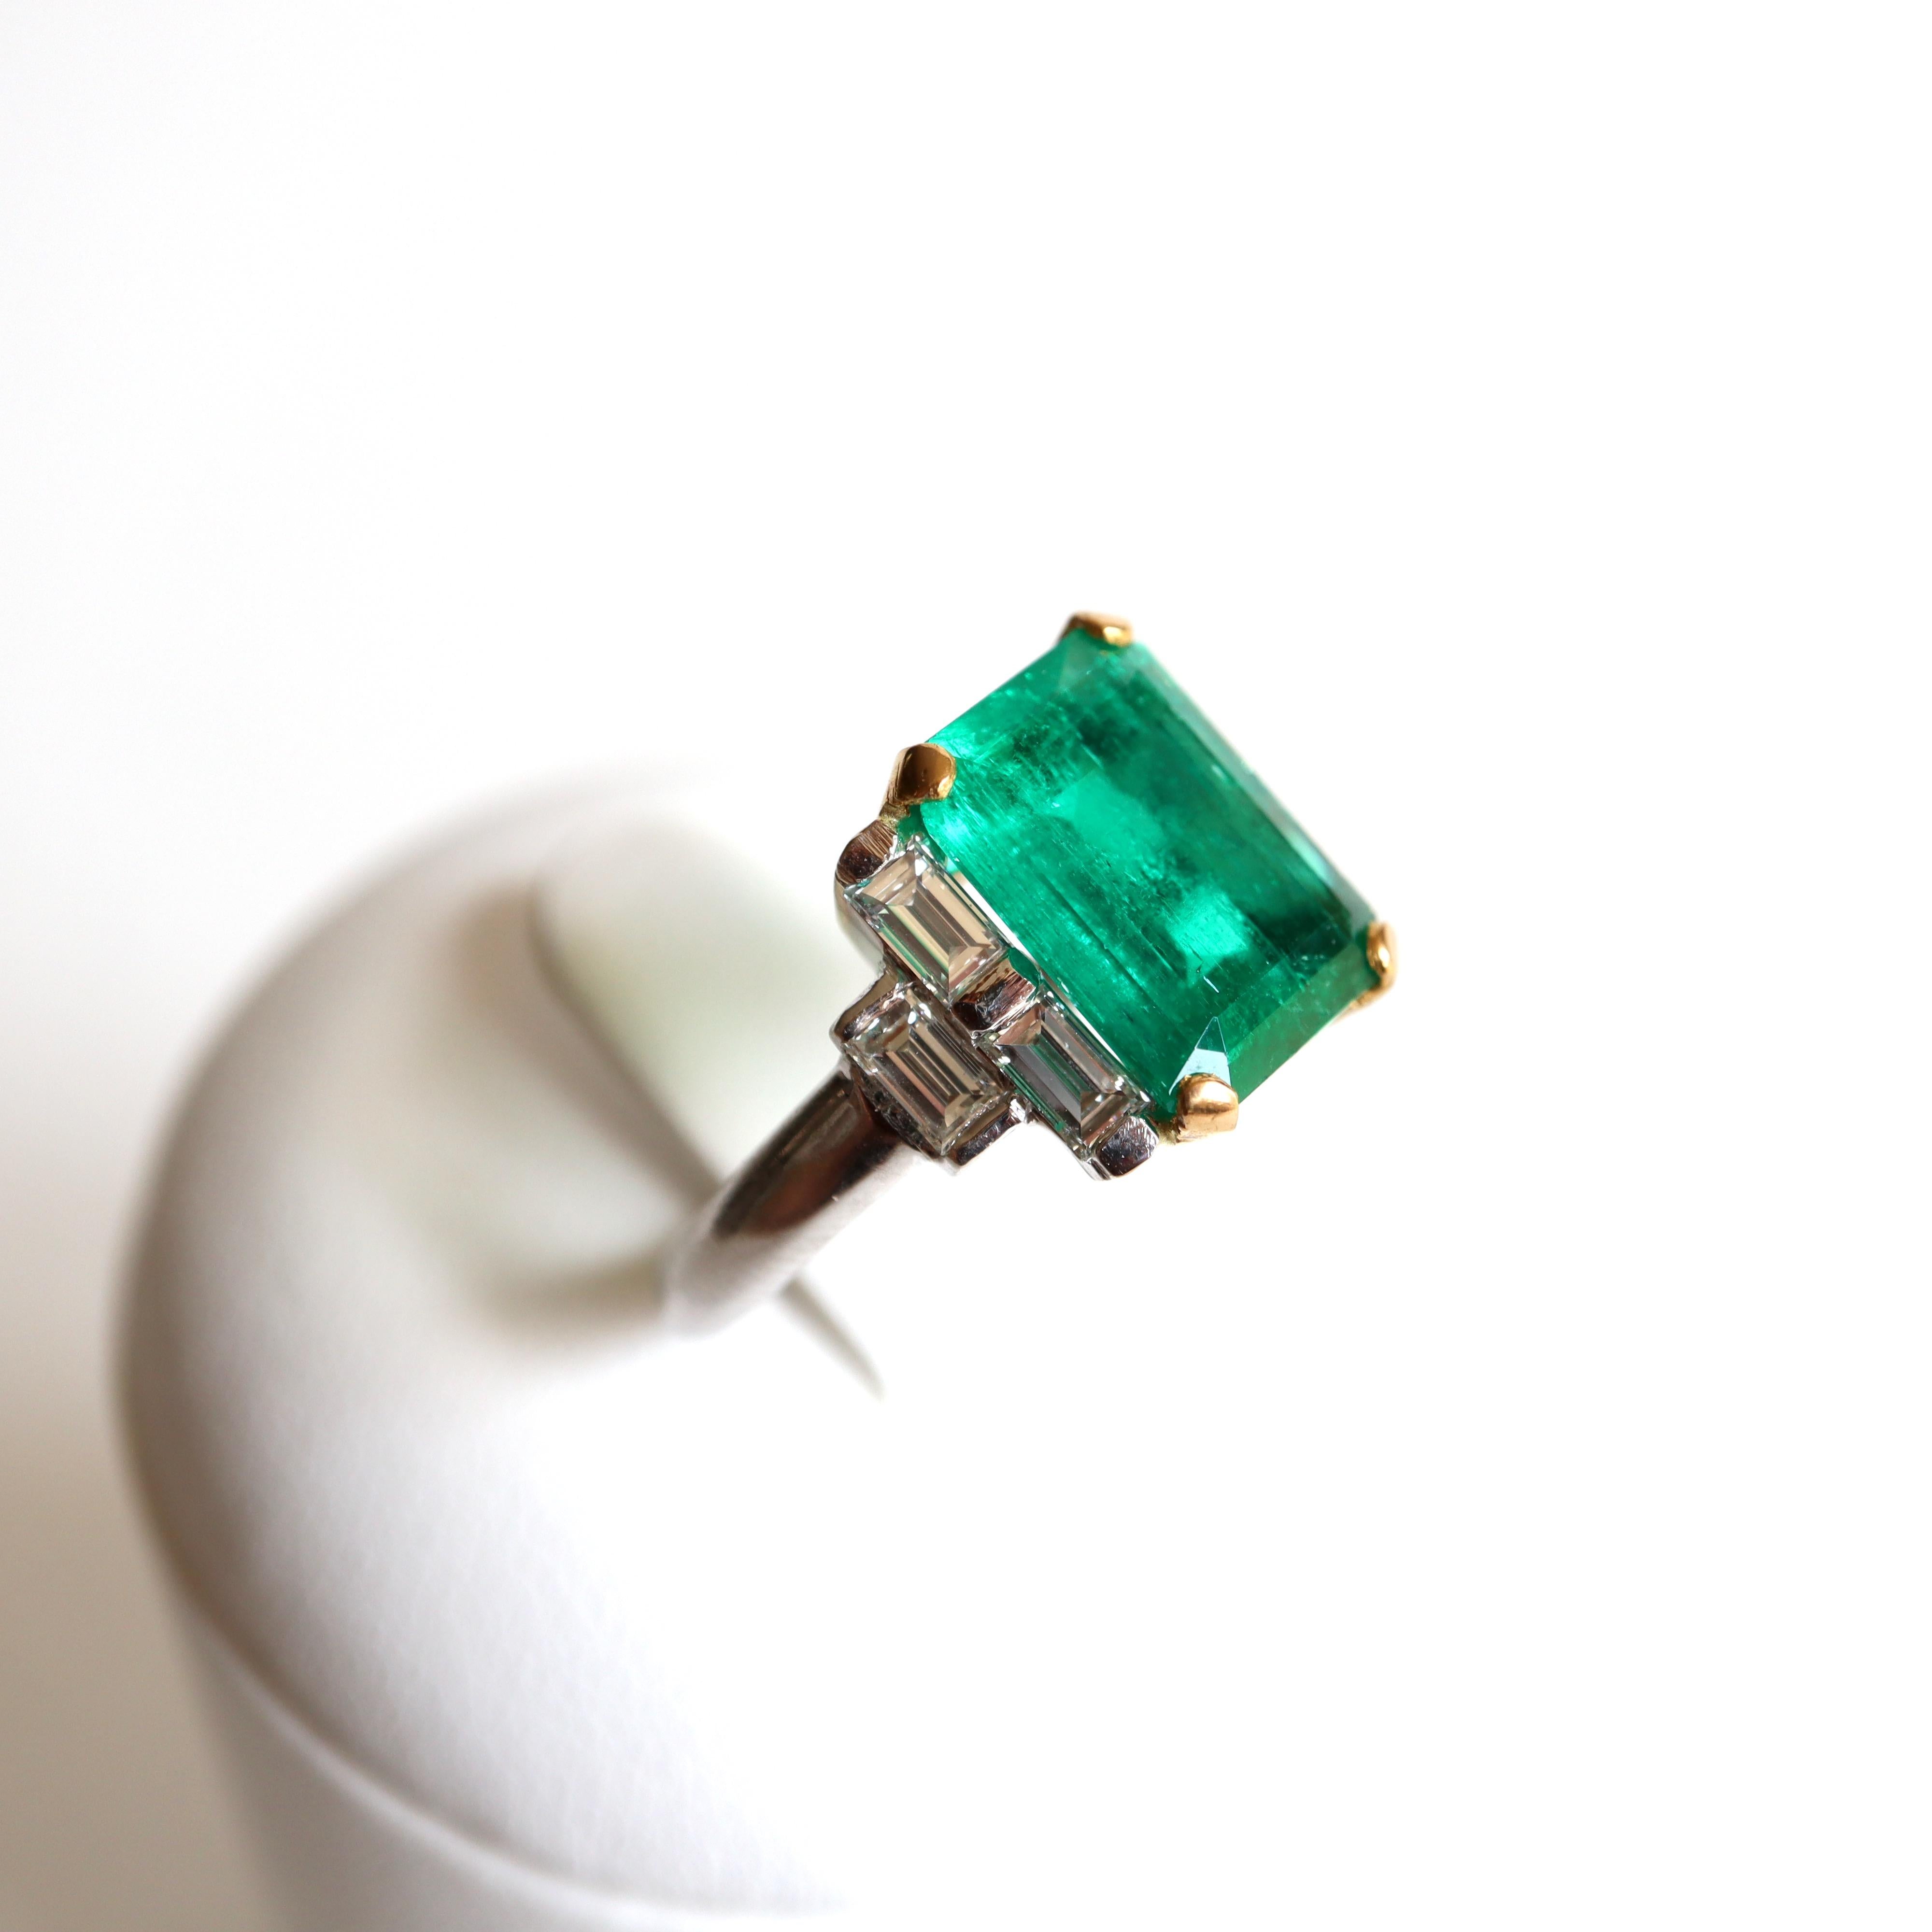 Emerald Cut Emerald Ring 3.71 Carat in 18K White and Yellow Gold, Diamonds